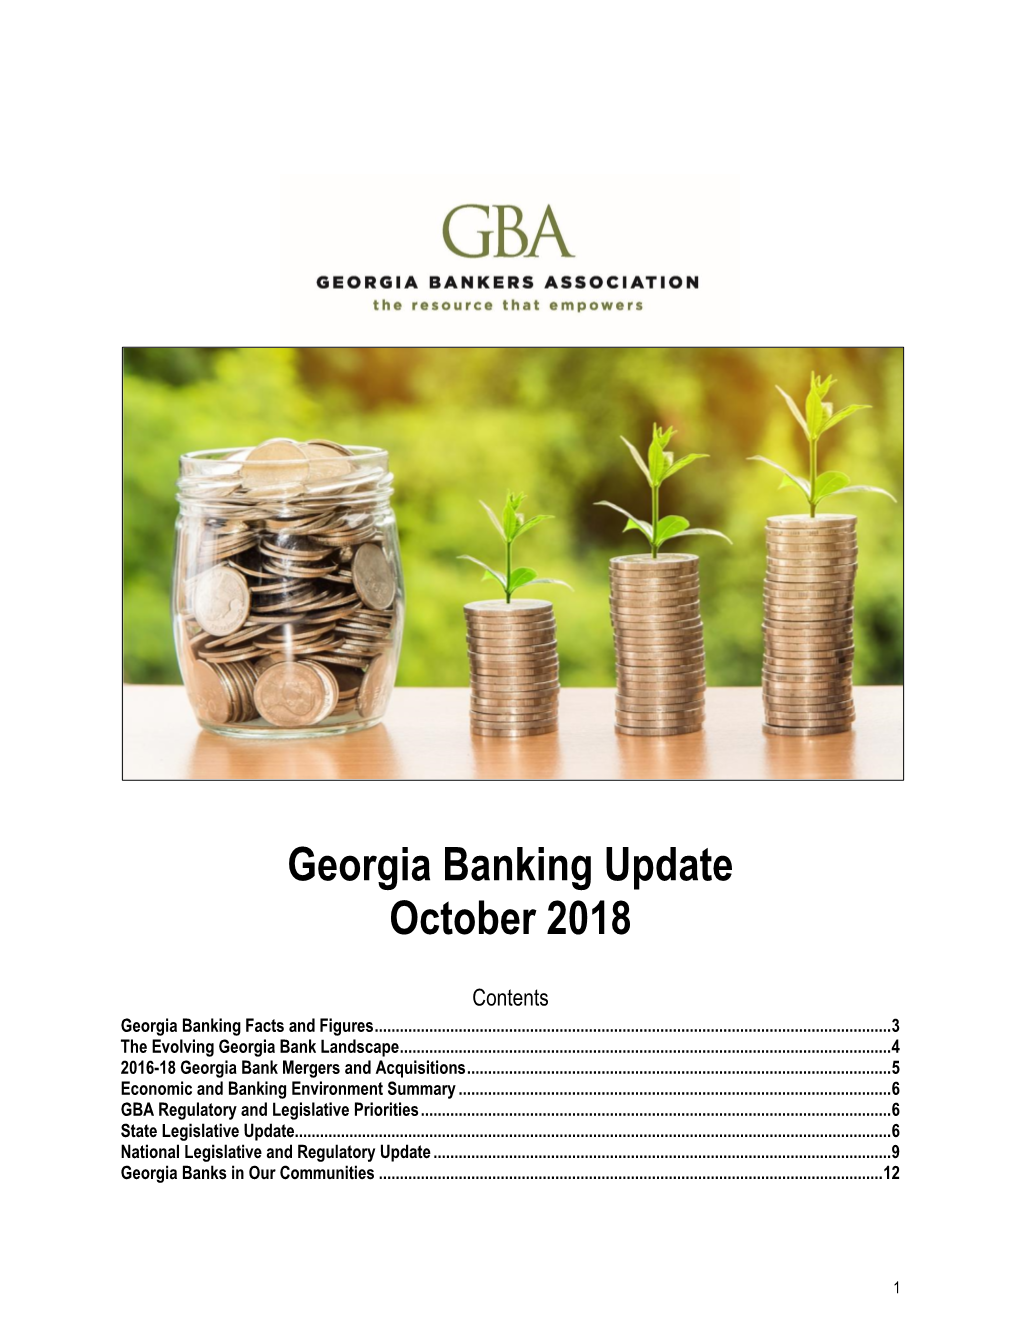 Georgia Banking Update October 2018